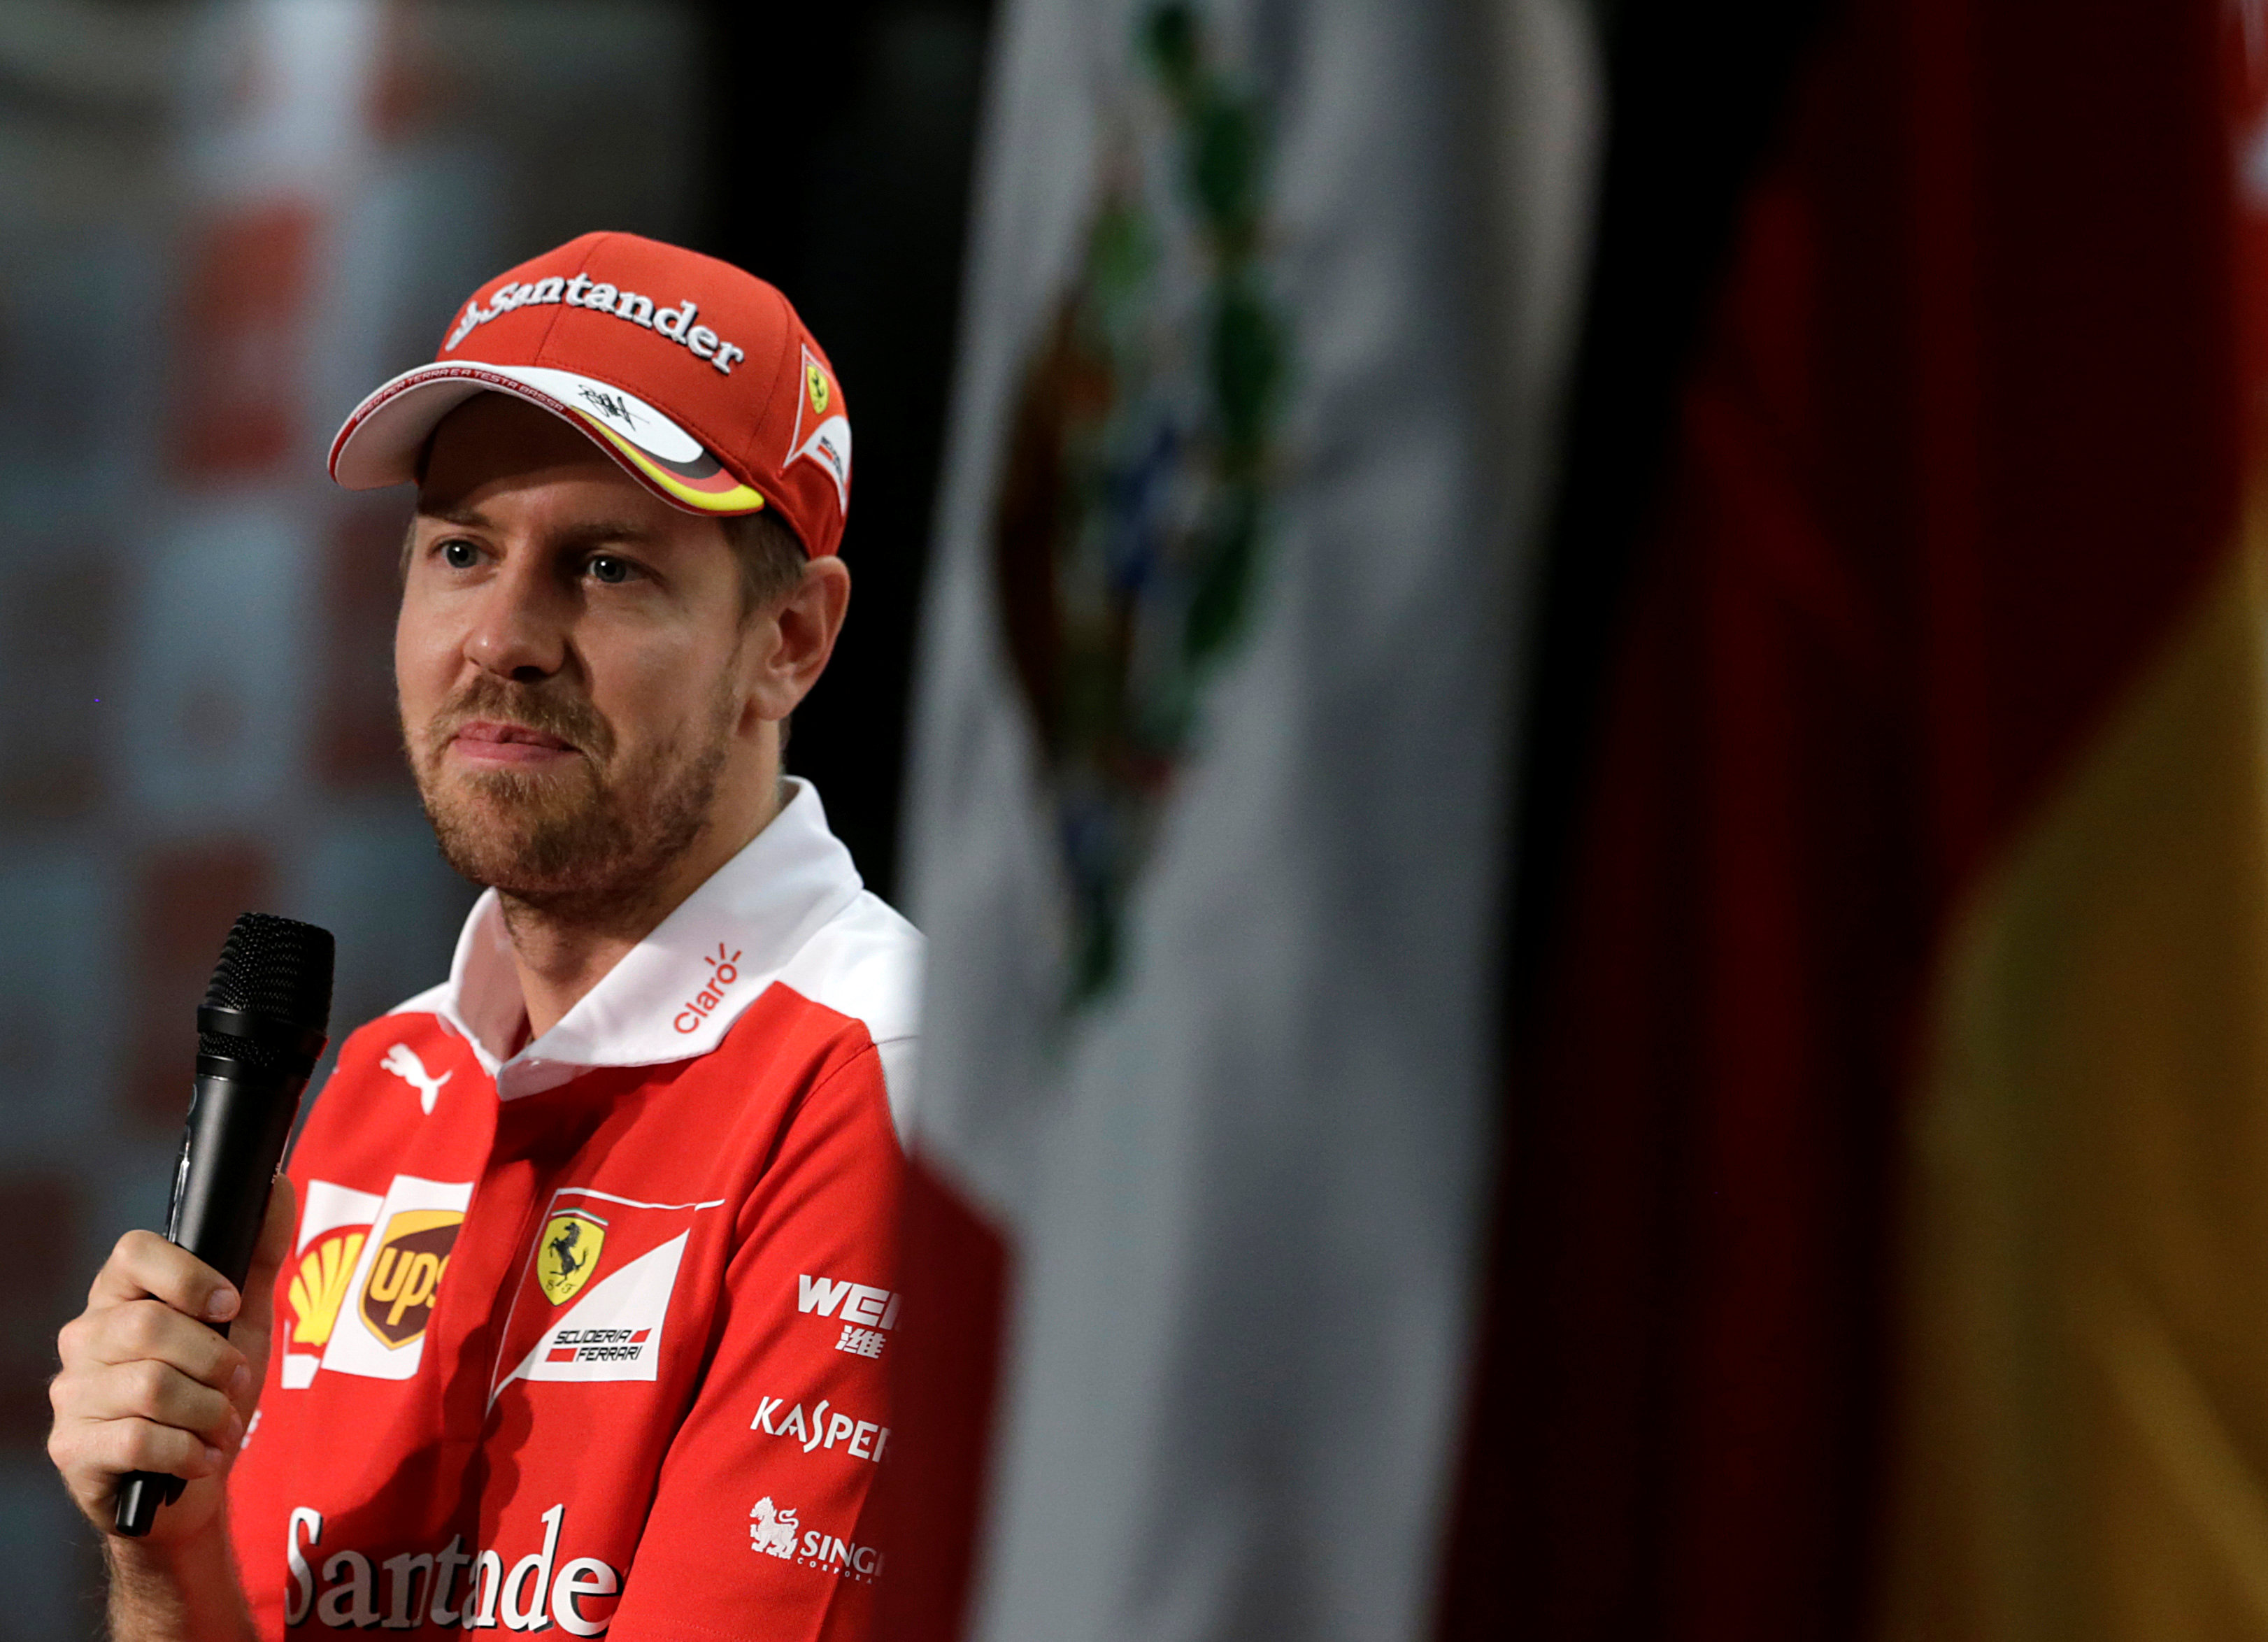 Vettel pide perdón al presidente de la FIA